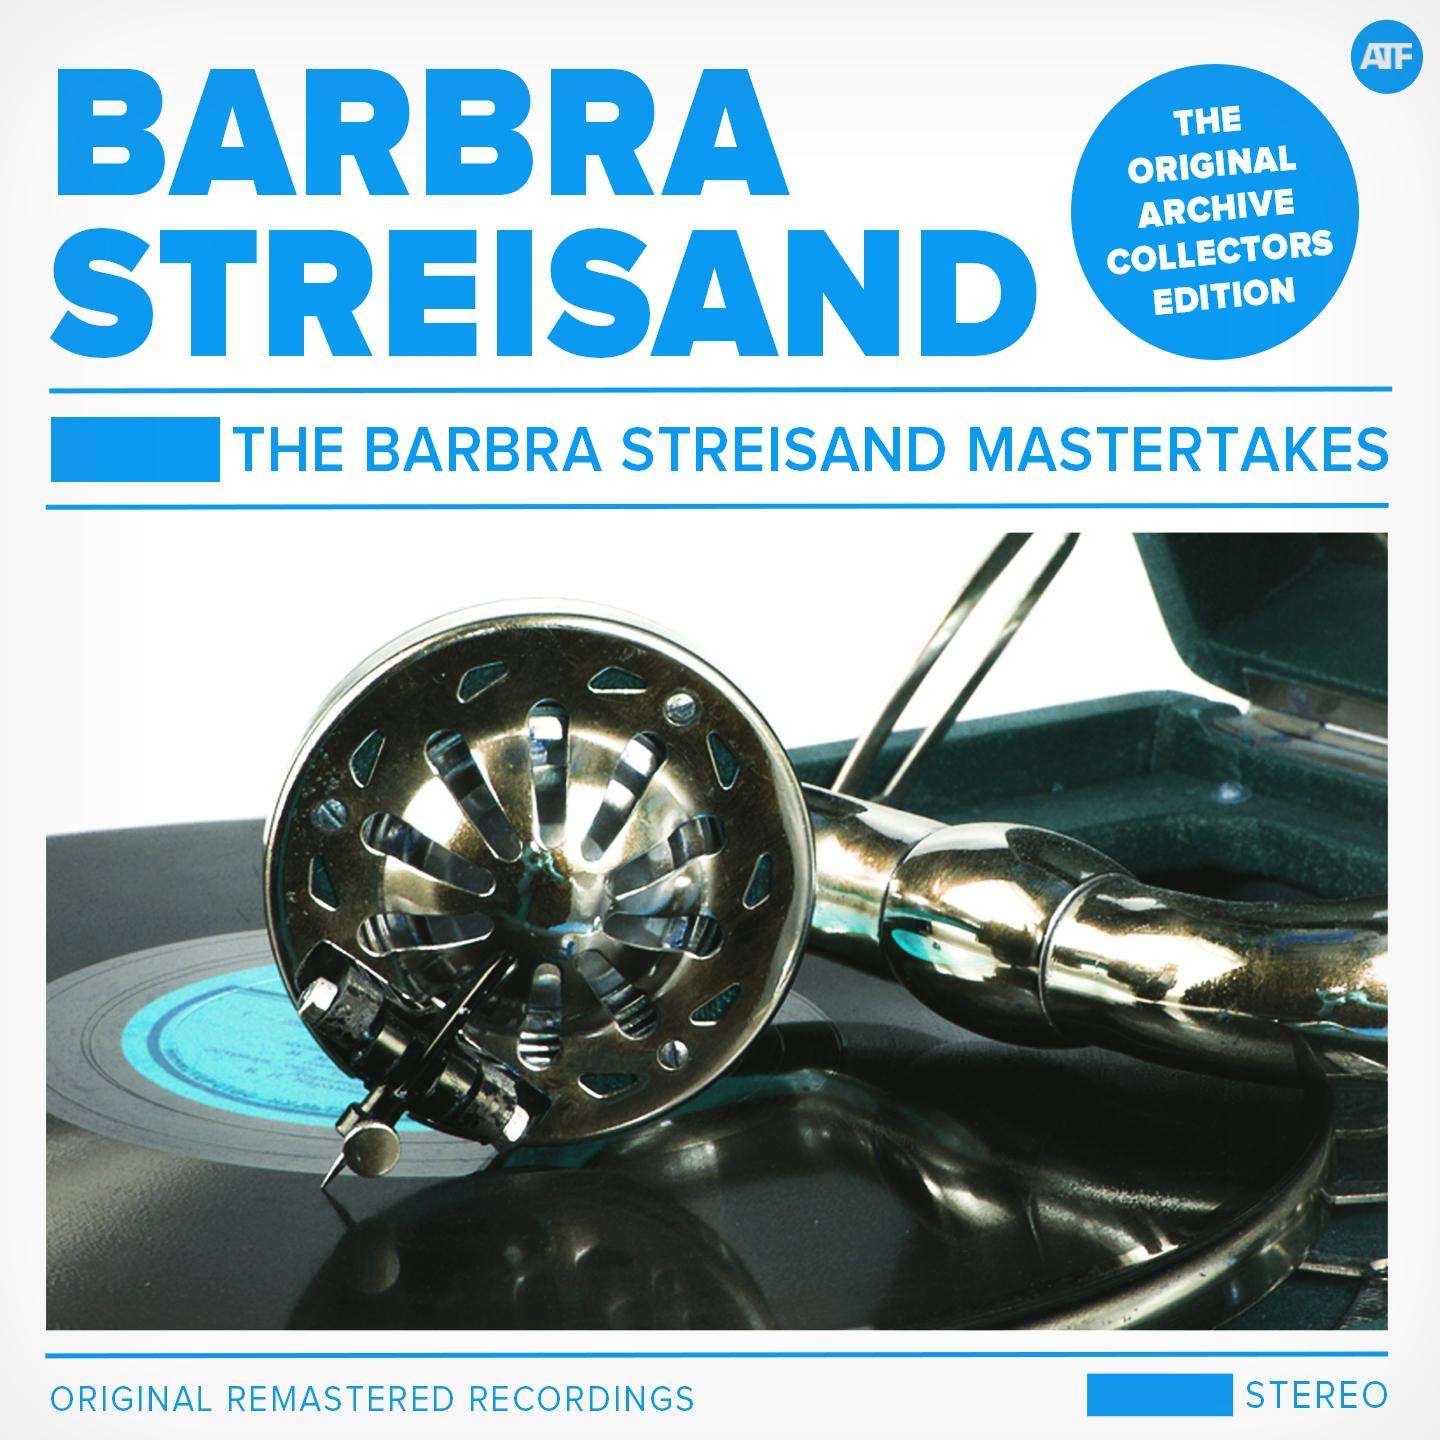 The Barbra Streisand Mastertakes